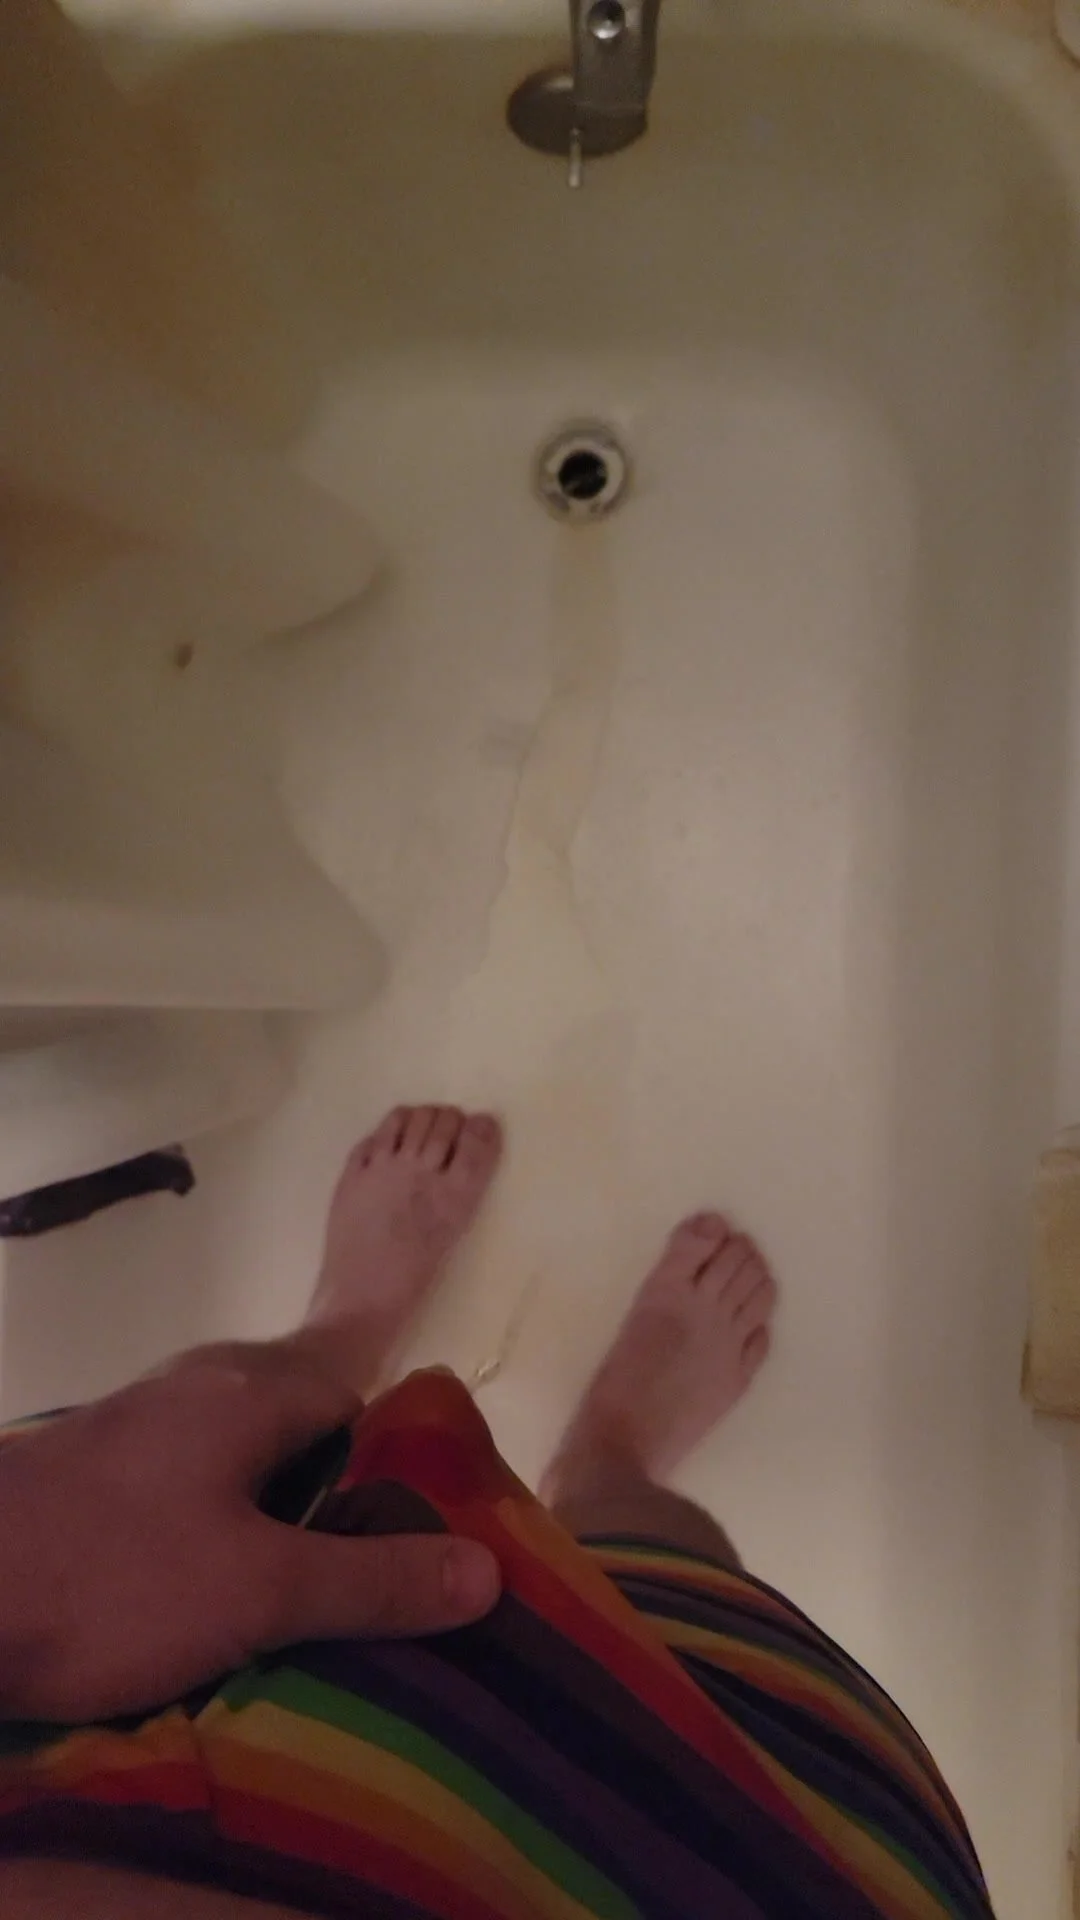 Bursting accident in the bathtub